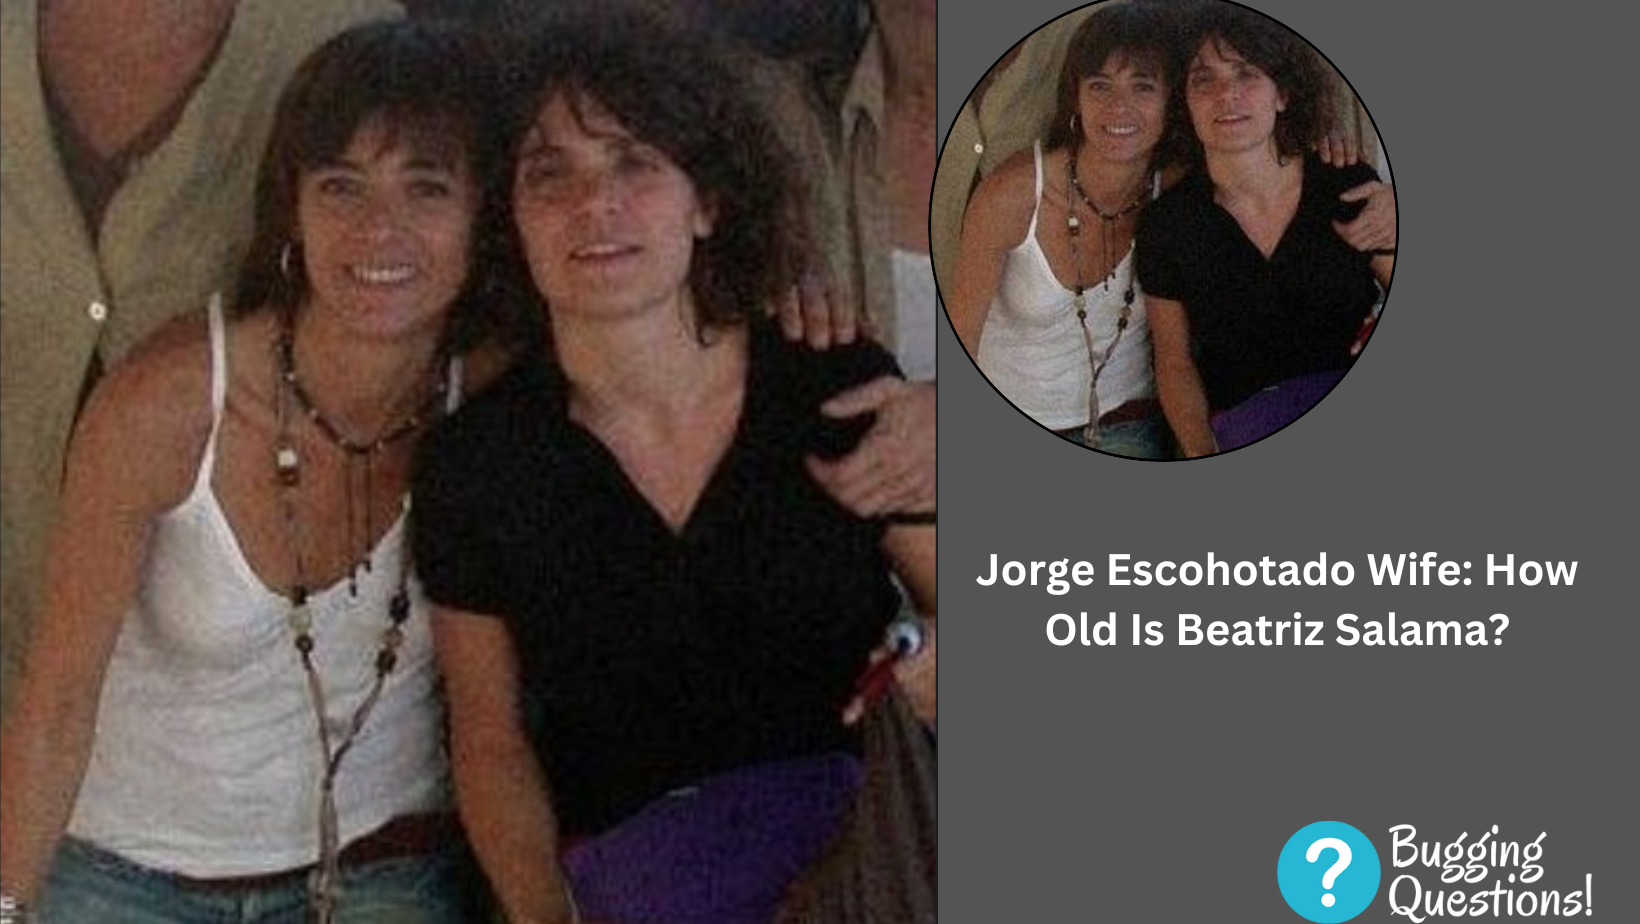 Jorge Escohotado Wife: How Old Is Beatriz Salama?